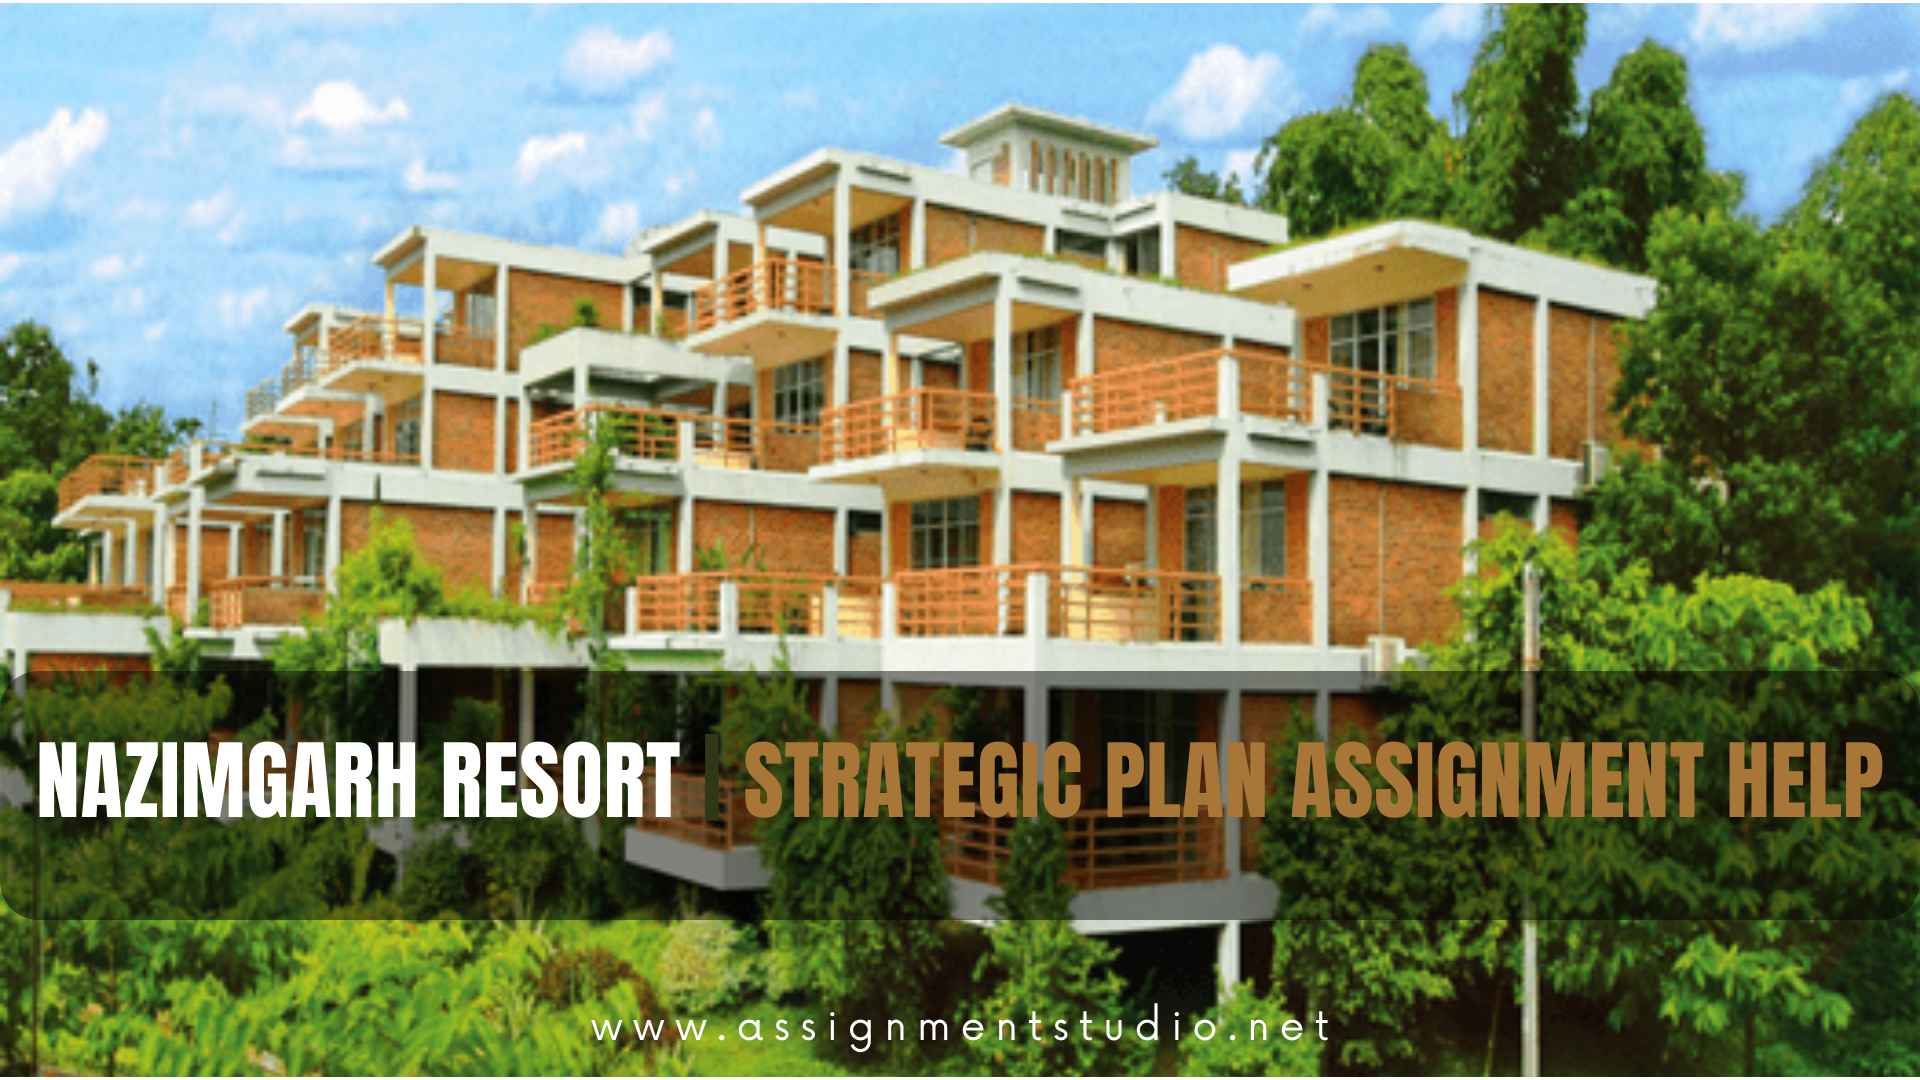 Nazimgarh Resort Strategic plan assignment help